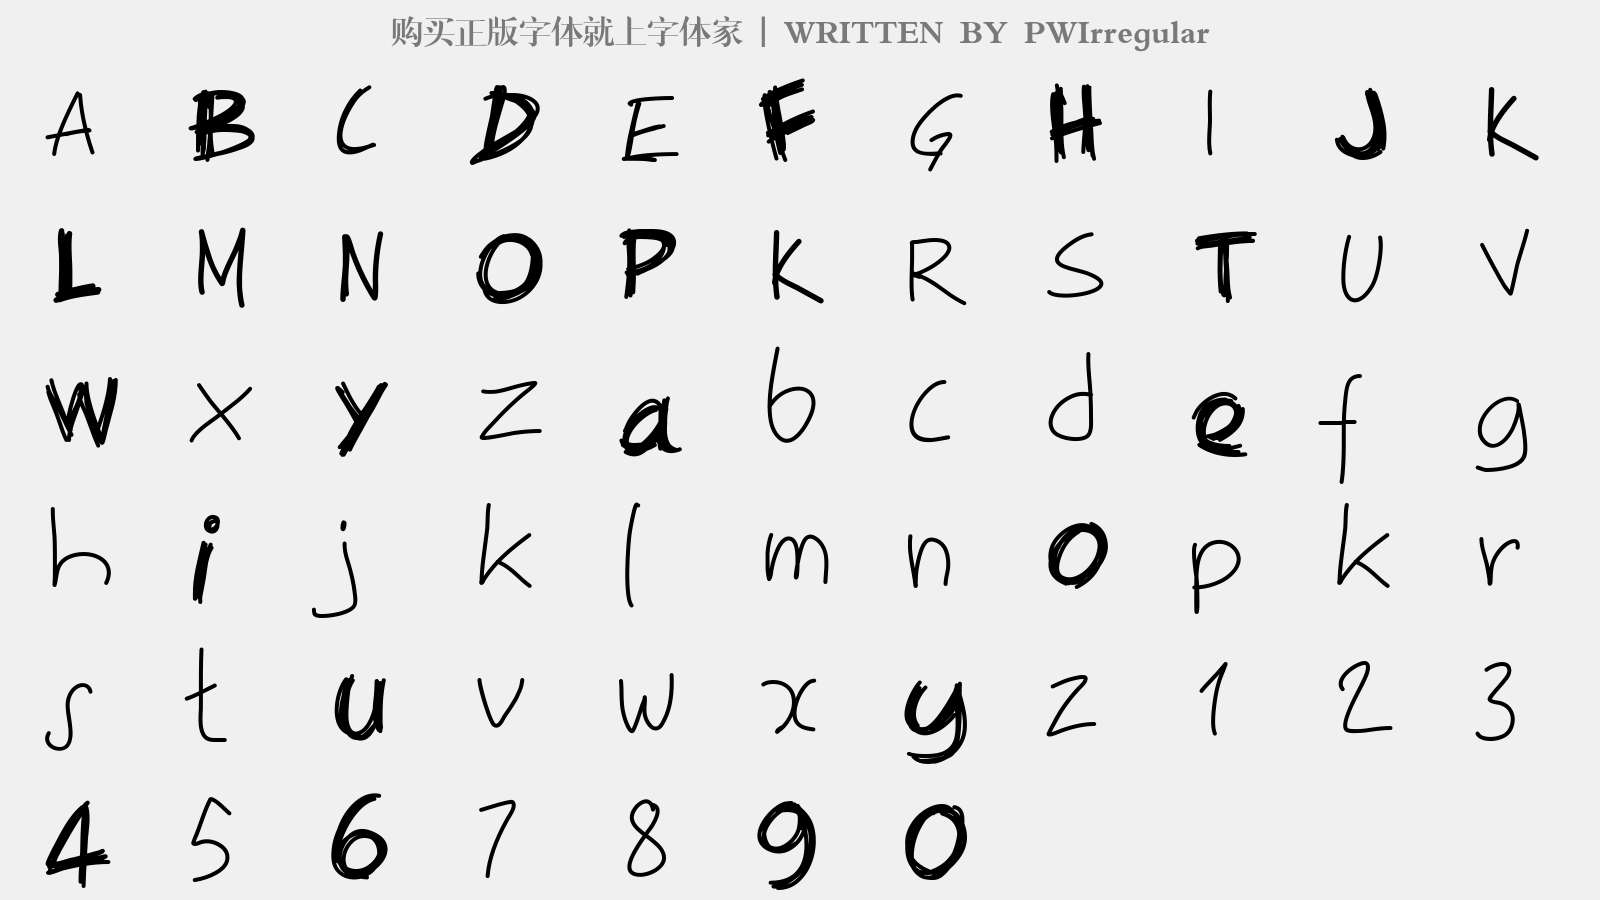 PWIrregular - 大写字母/小写字母/数字